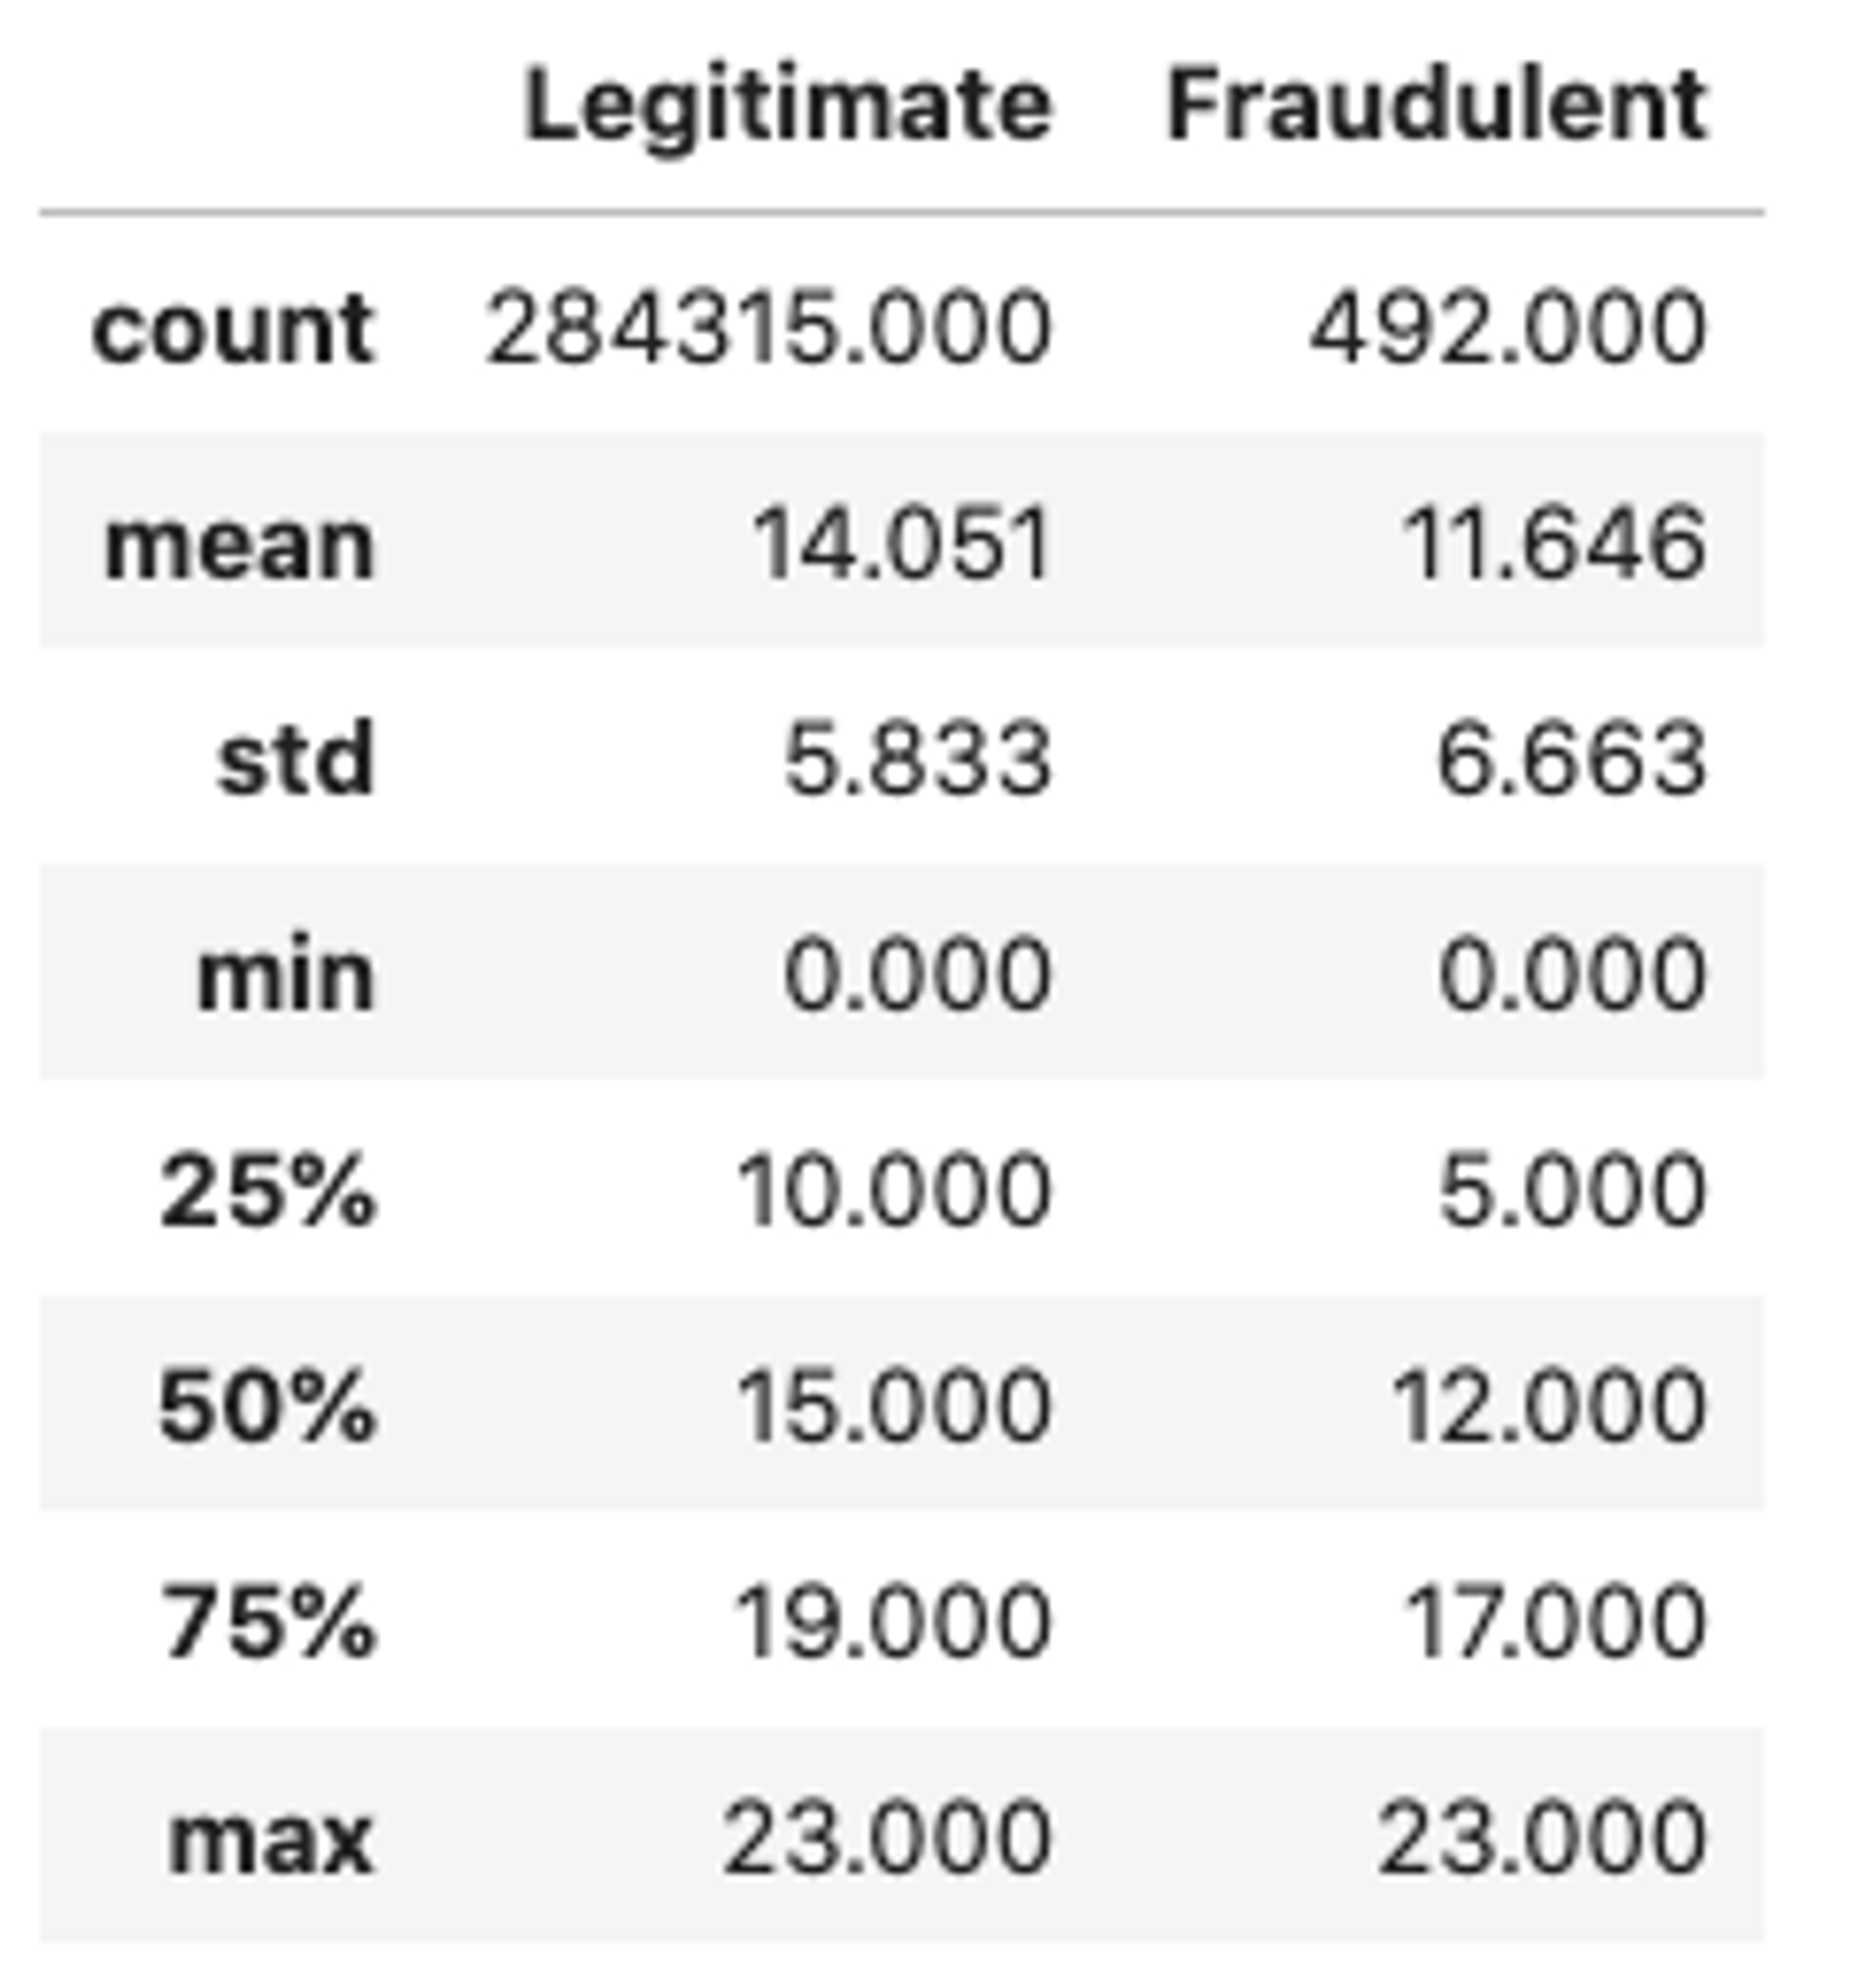 Statistics for the Hour attribute - legitimate transactions vs fraud (count, mean, std, min, max etc.)